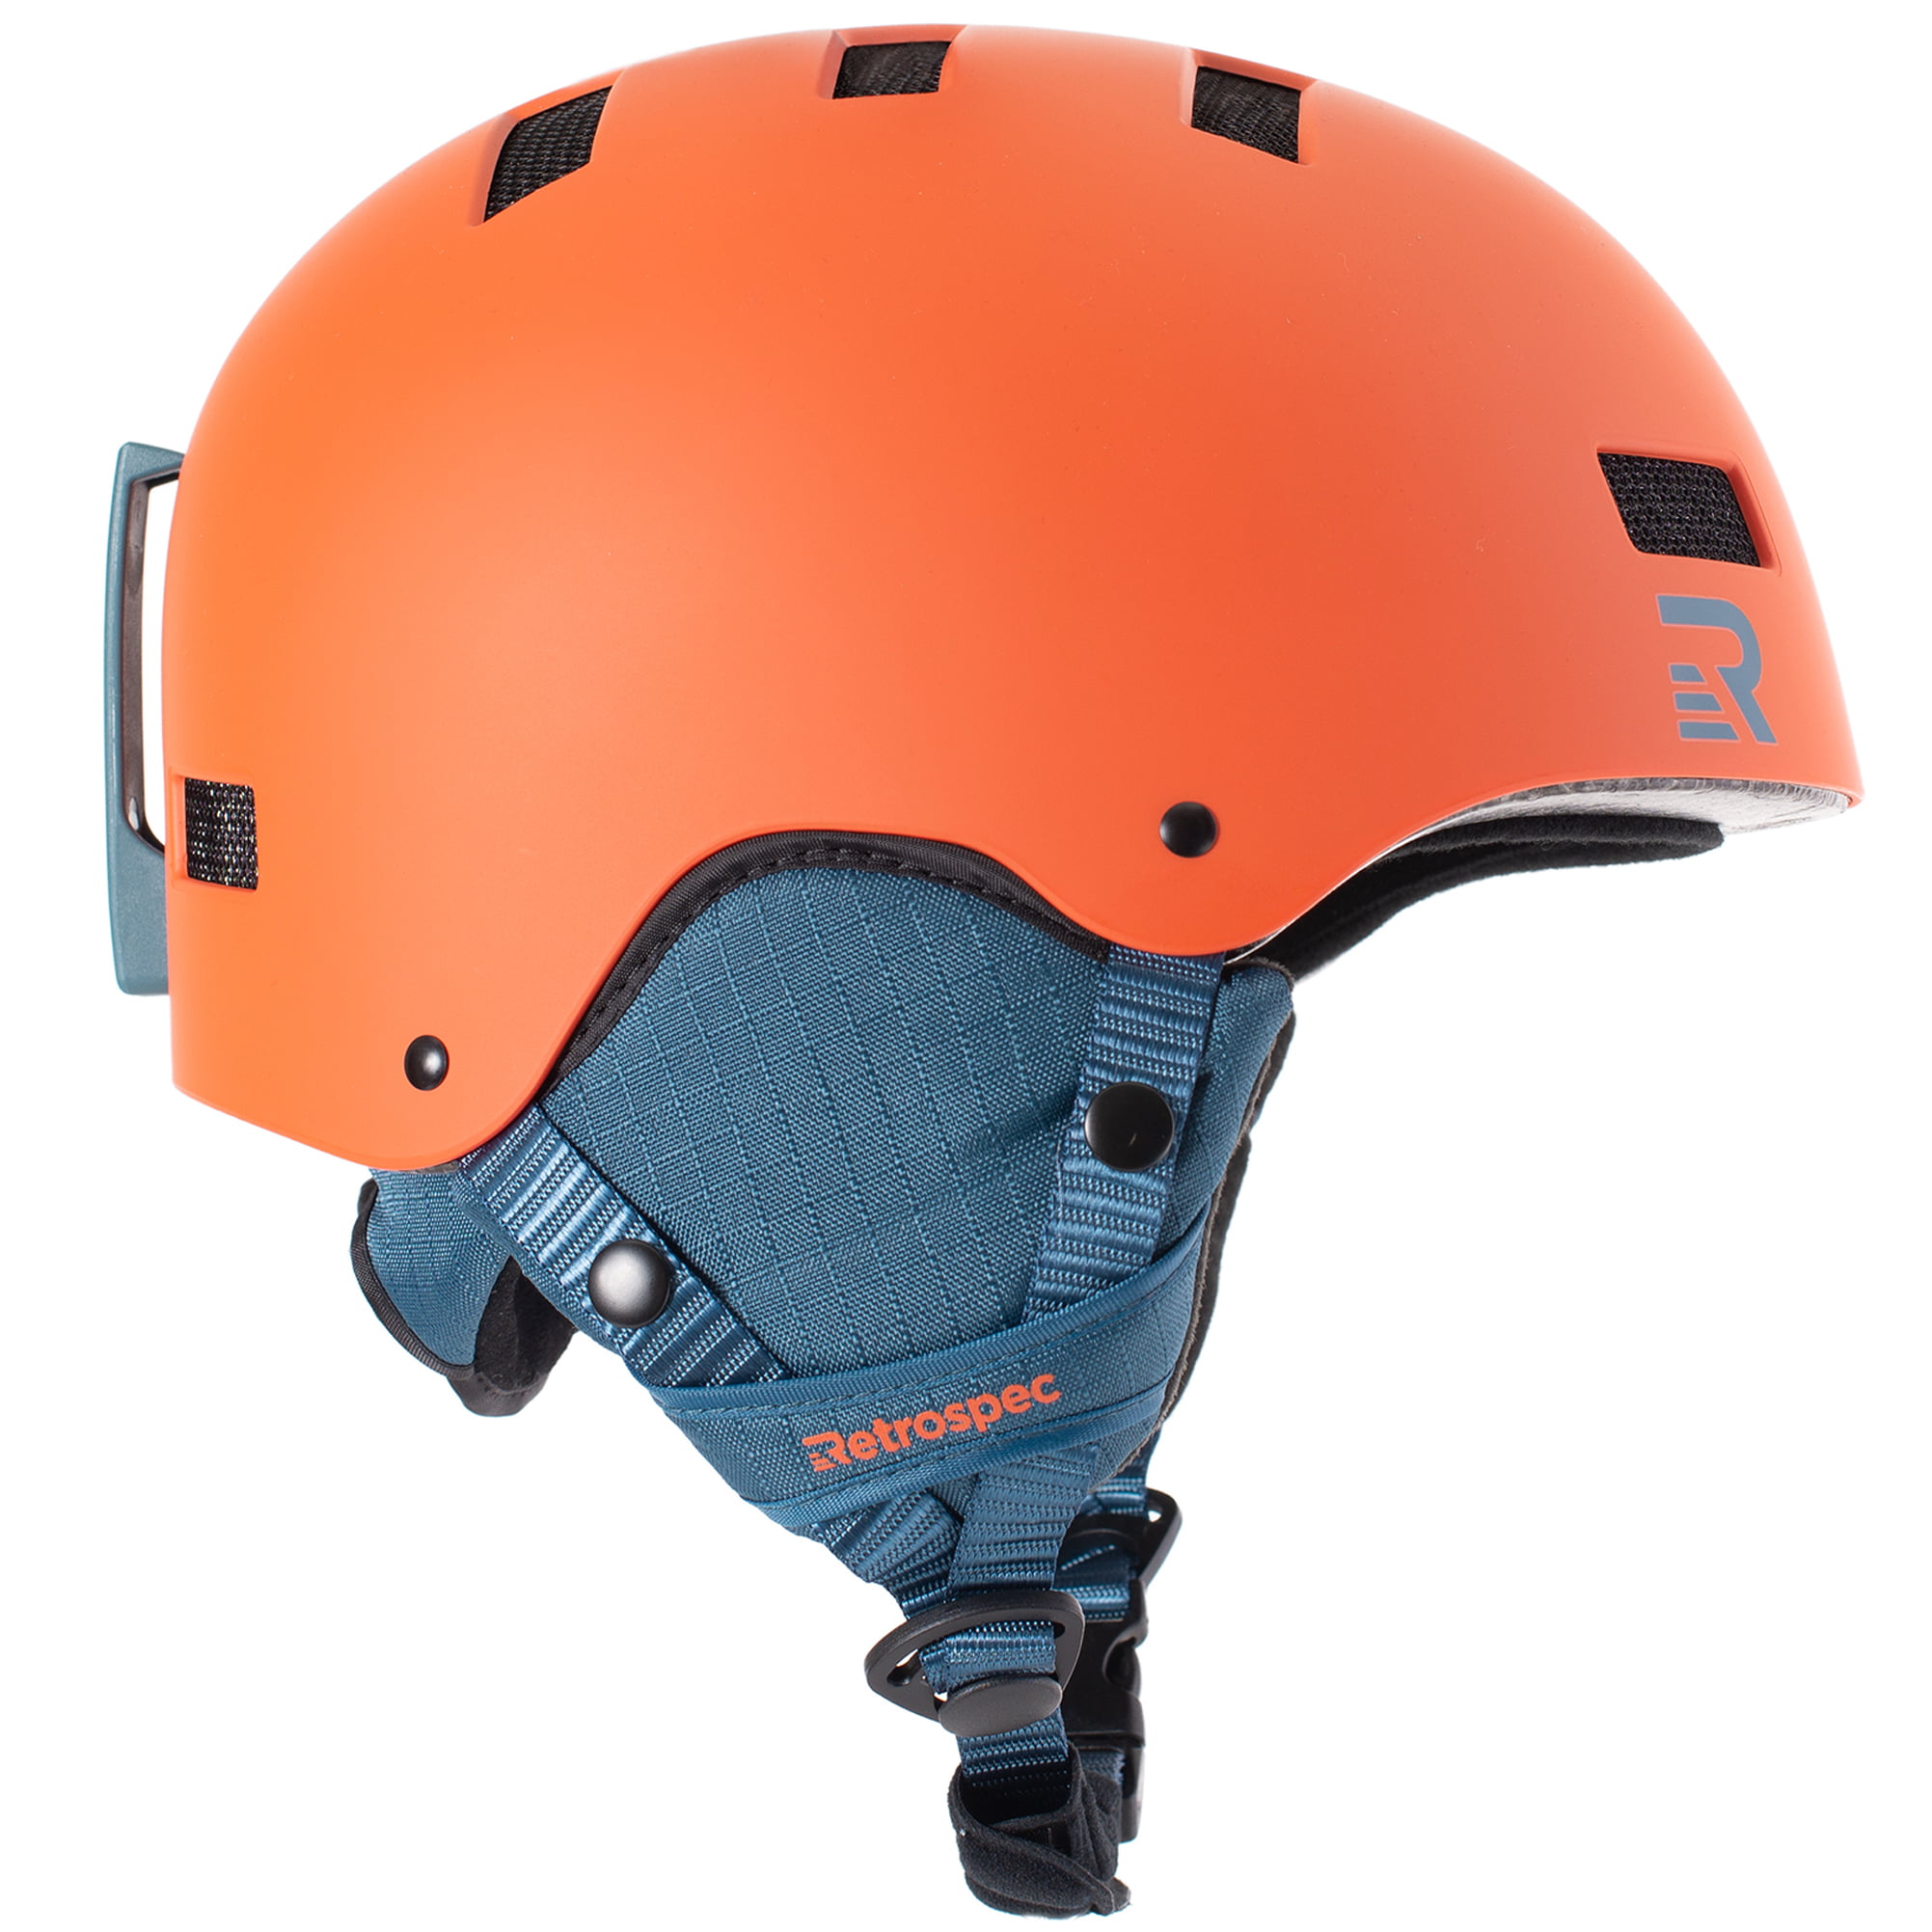 Lg PROPRO Adult Winter Sports Skiing Safety Helmet Snowboard Skateboard Orange 